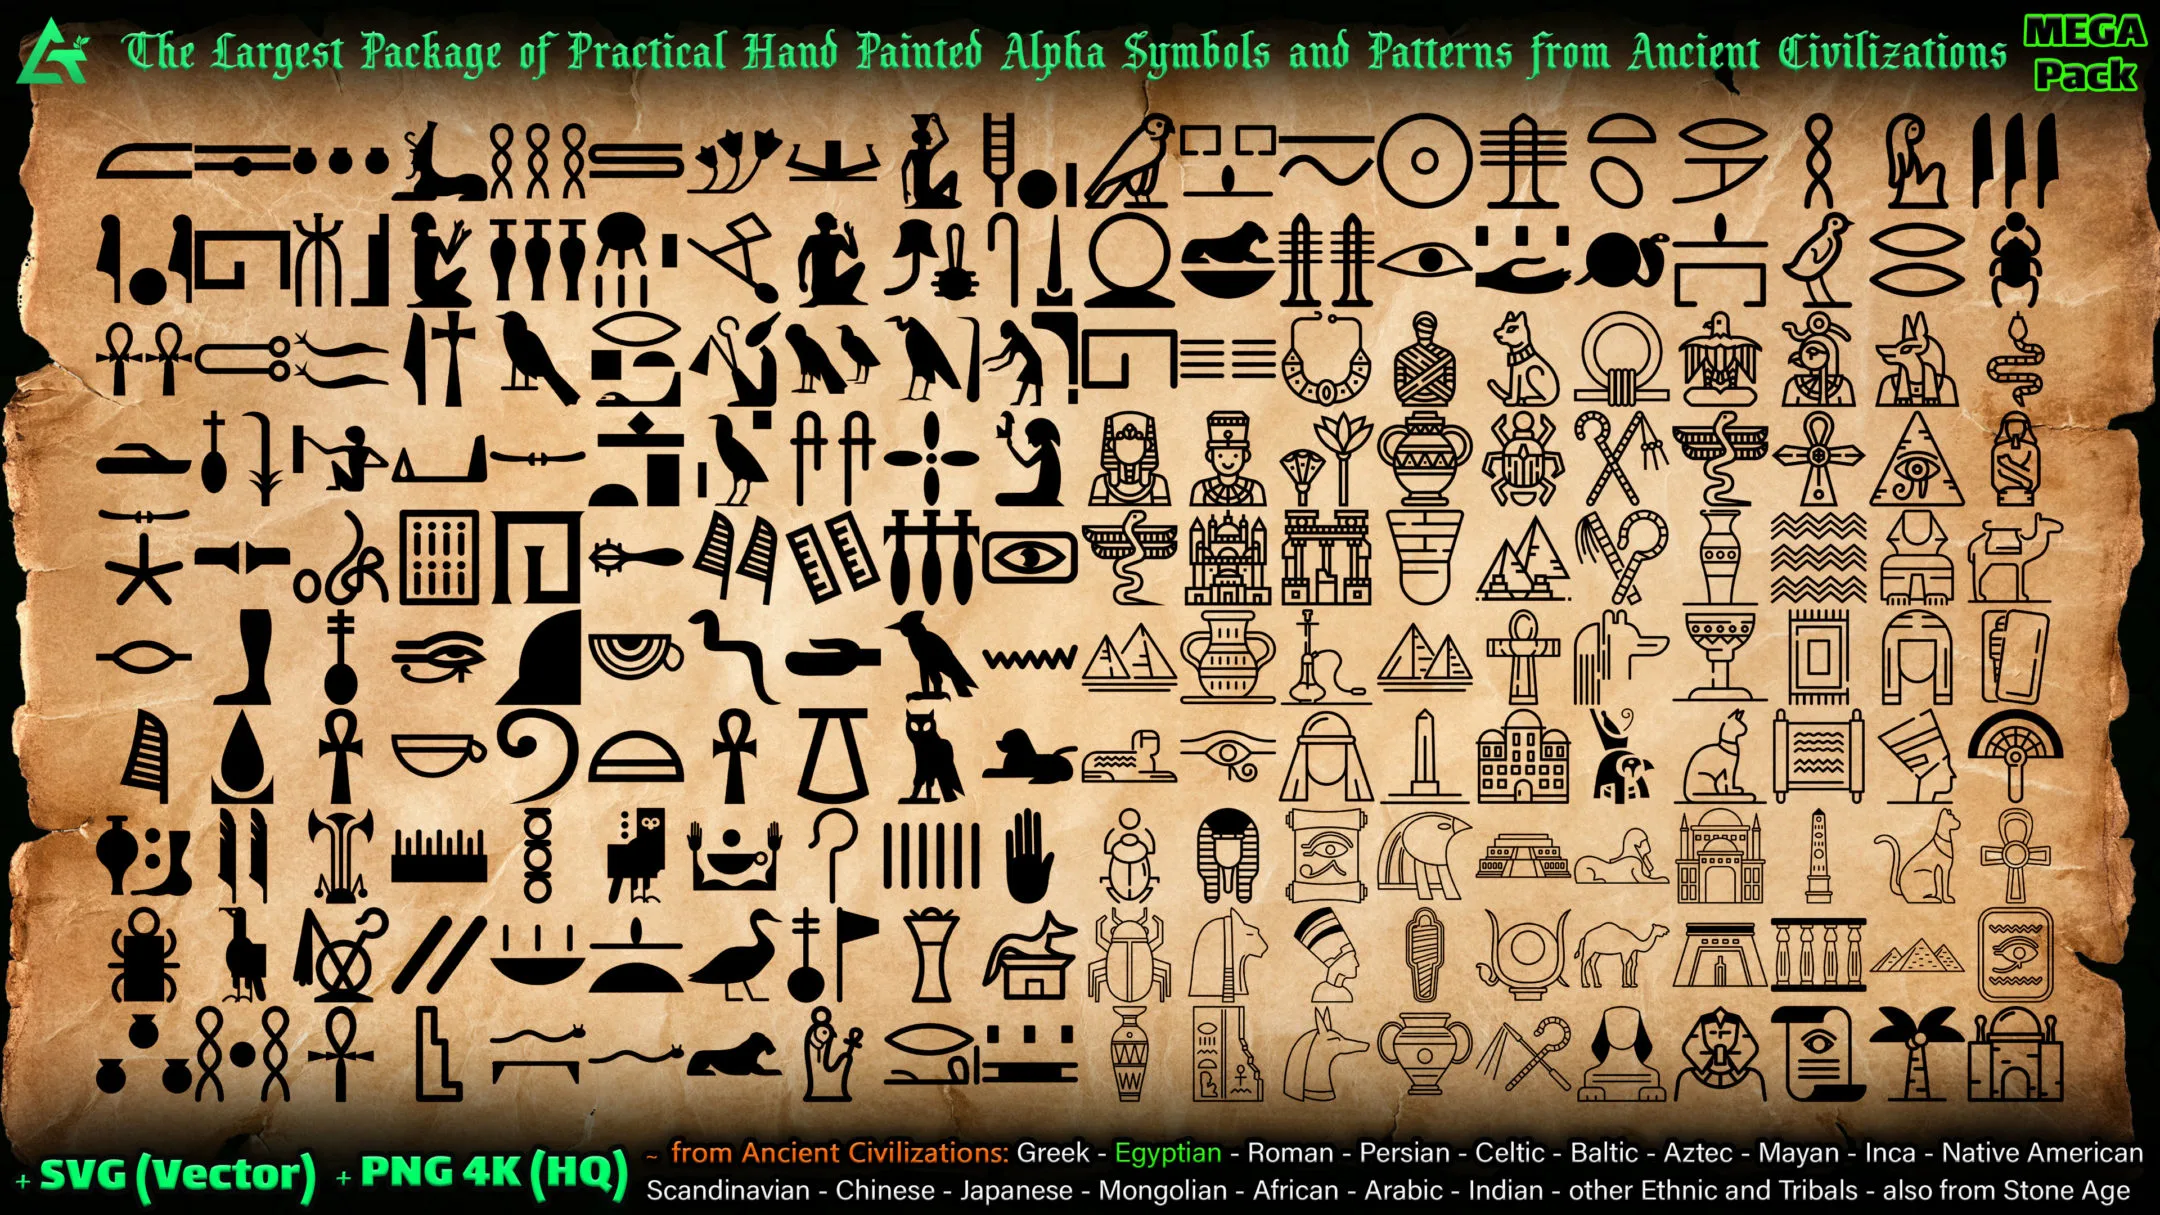 6060 Practical Alpha Symbols and Patterns from Ancient Civilizations (MEGA Pack) - Vol 10